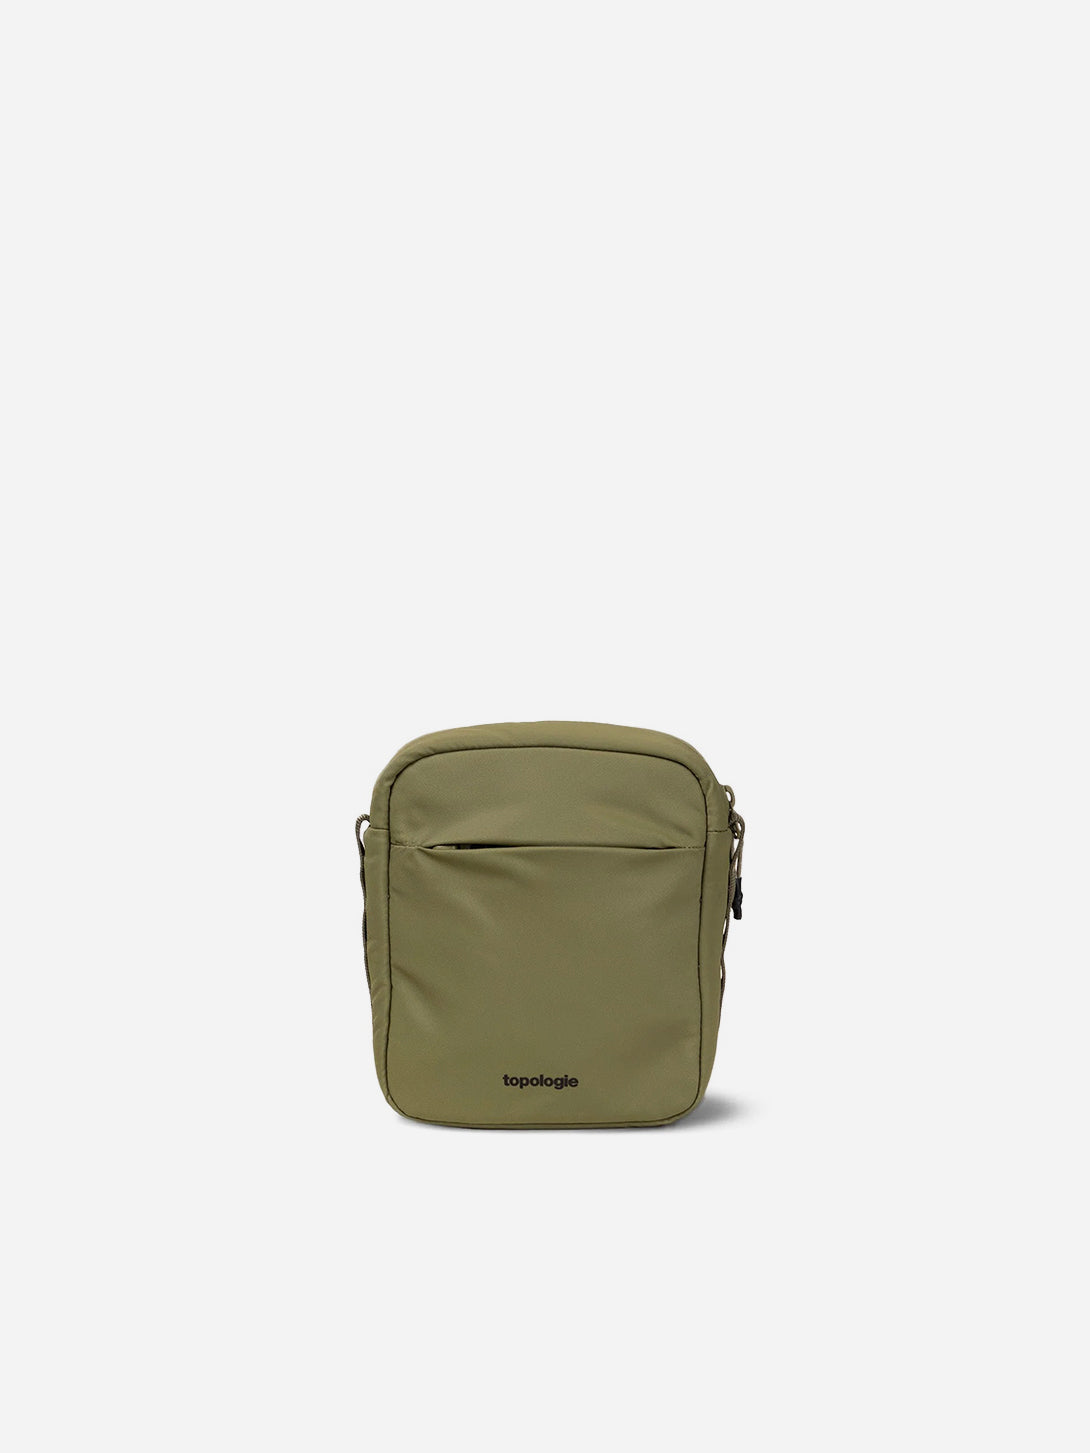 Olive Bomber Tinbox Medium (Bag Only) Topologie Medium Sized Utility Bag